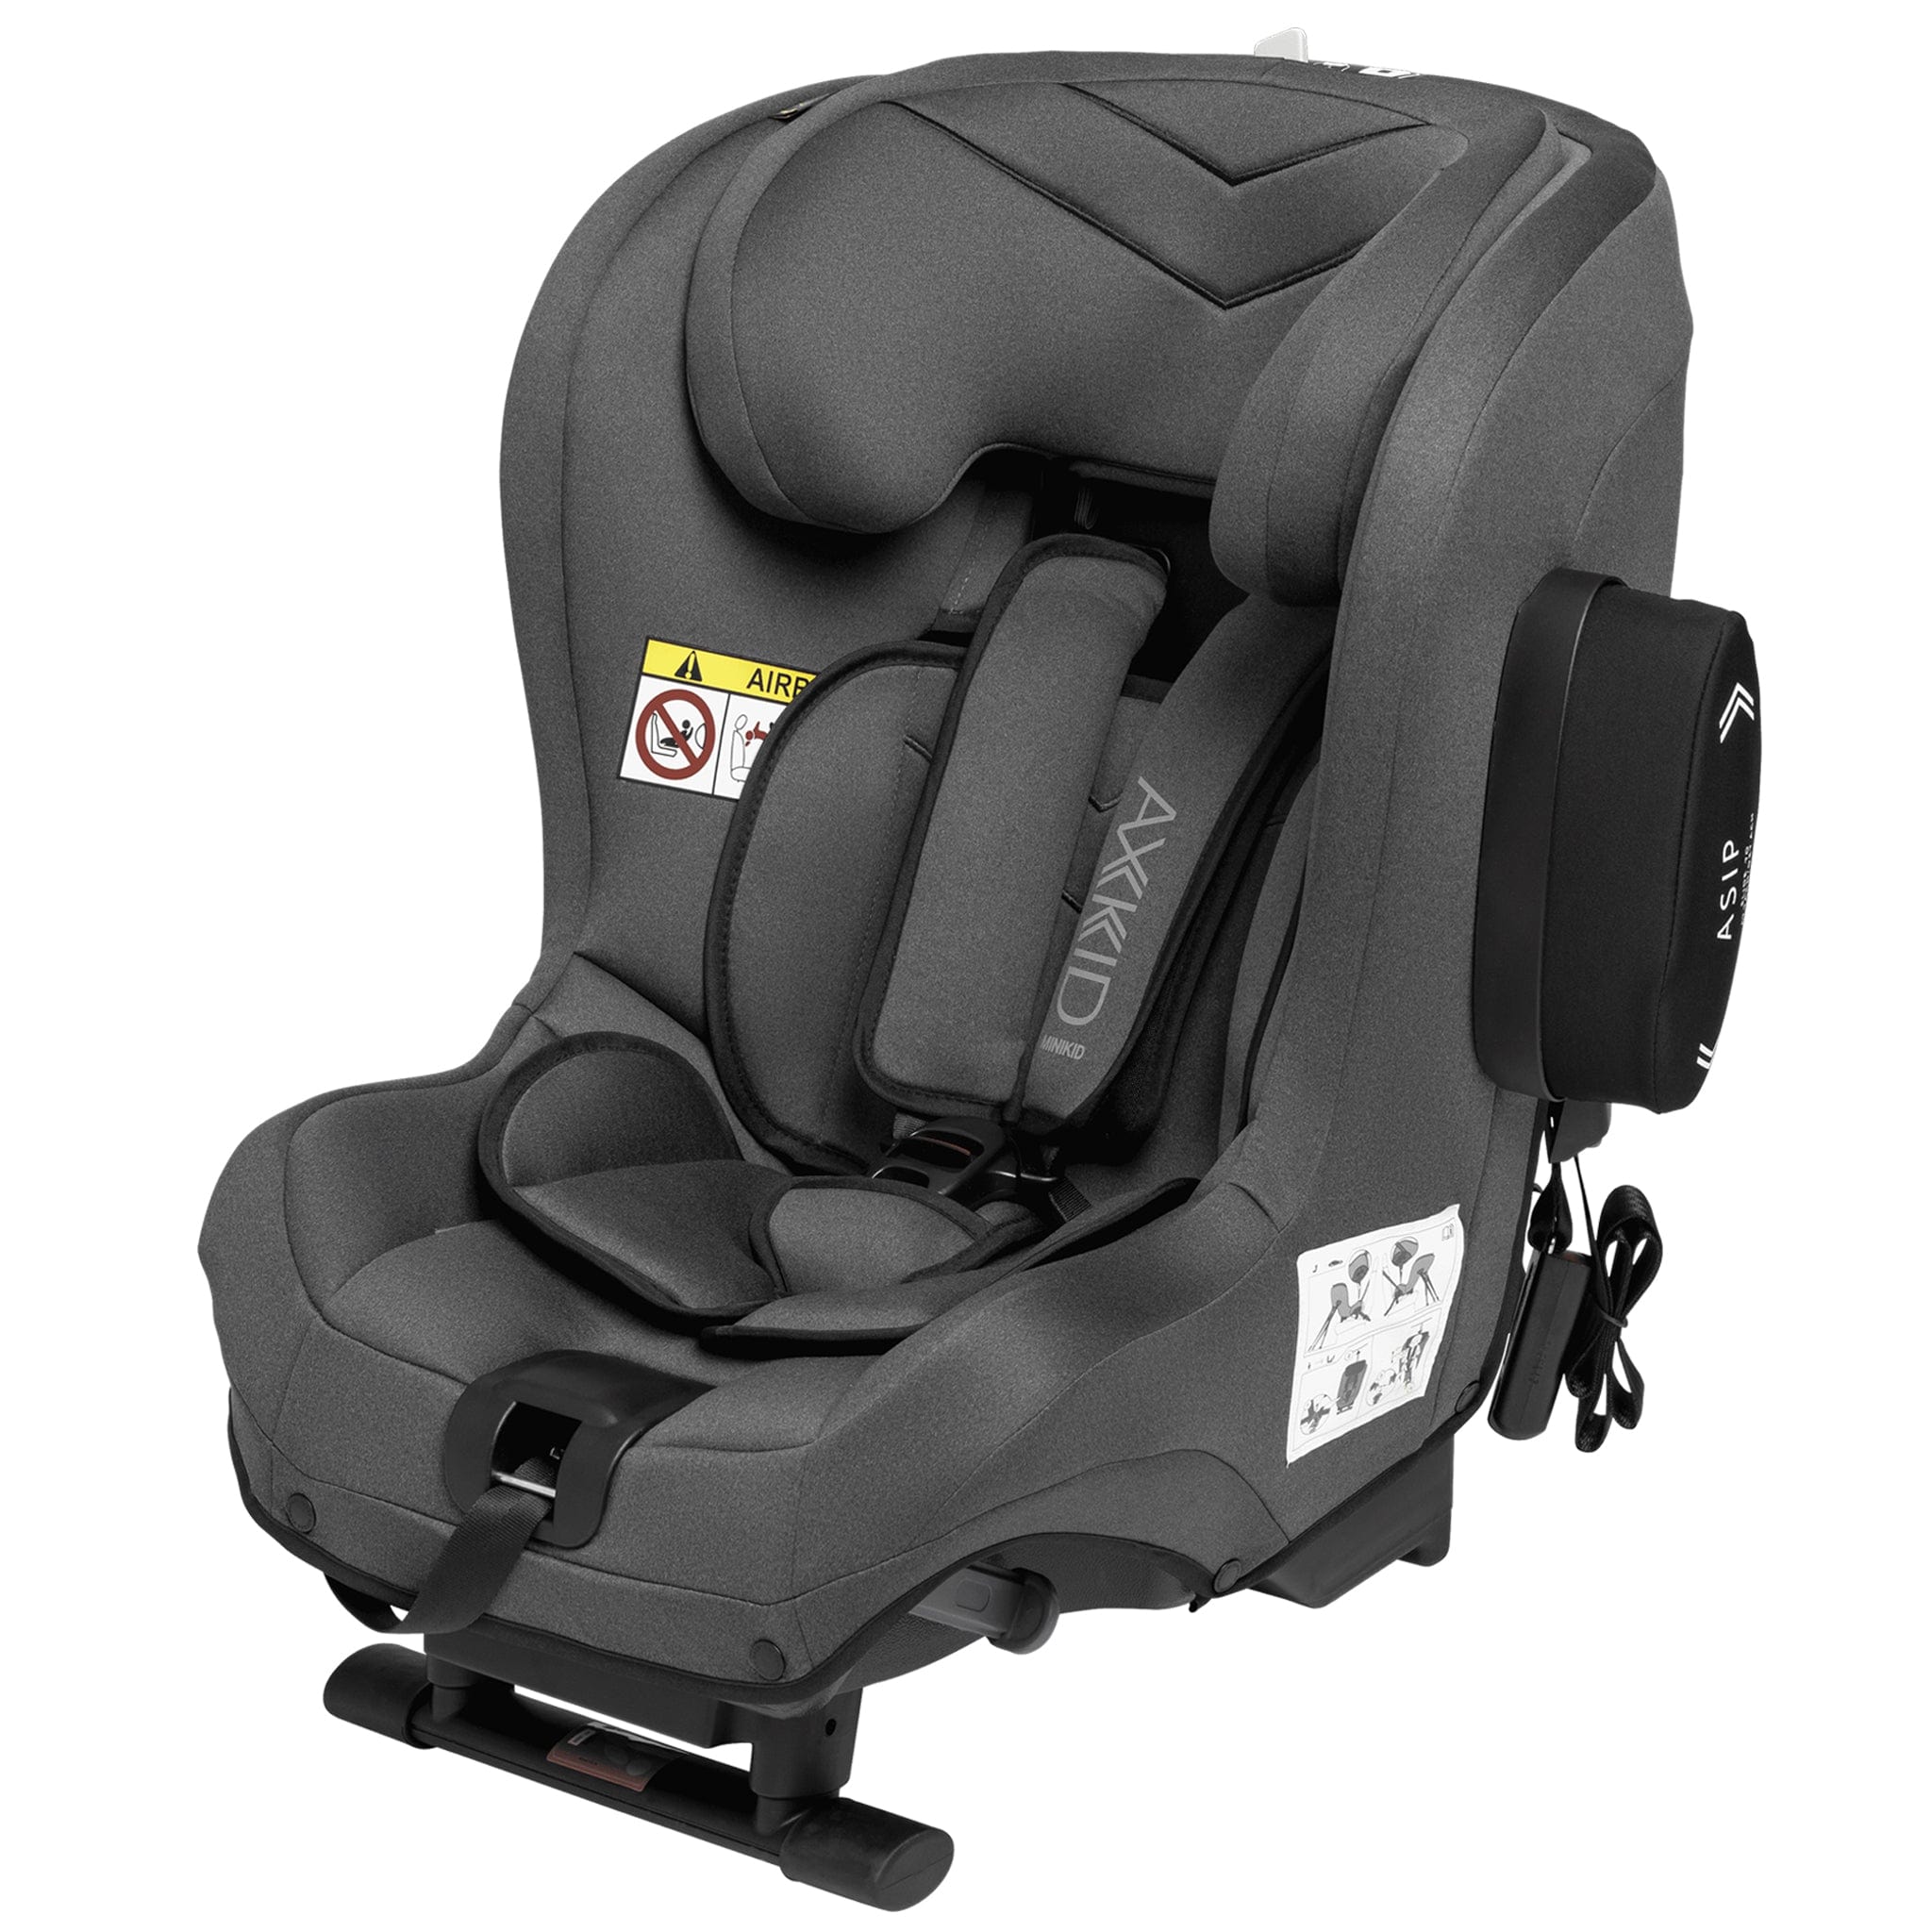 Axkid rear facing car seats Axkid Minikid 2 - Granite Melange Premium & Free Seat Protector 10537-GRA-MEL